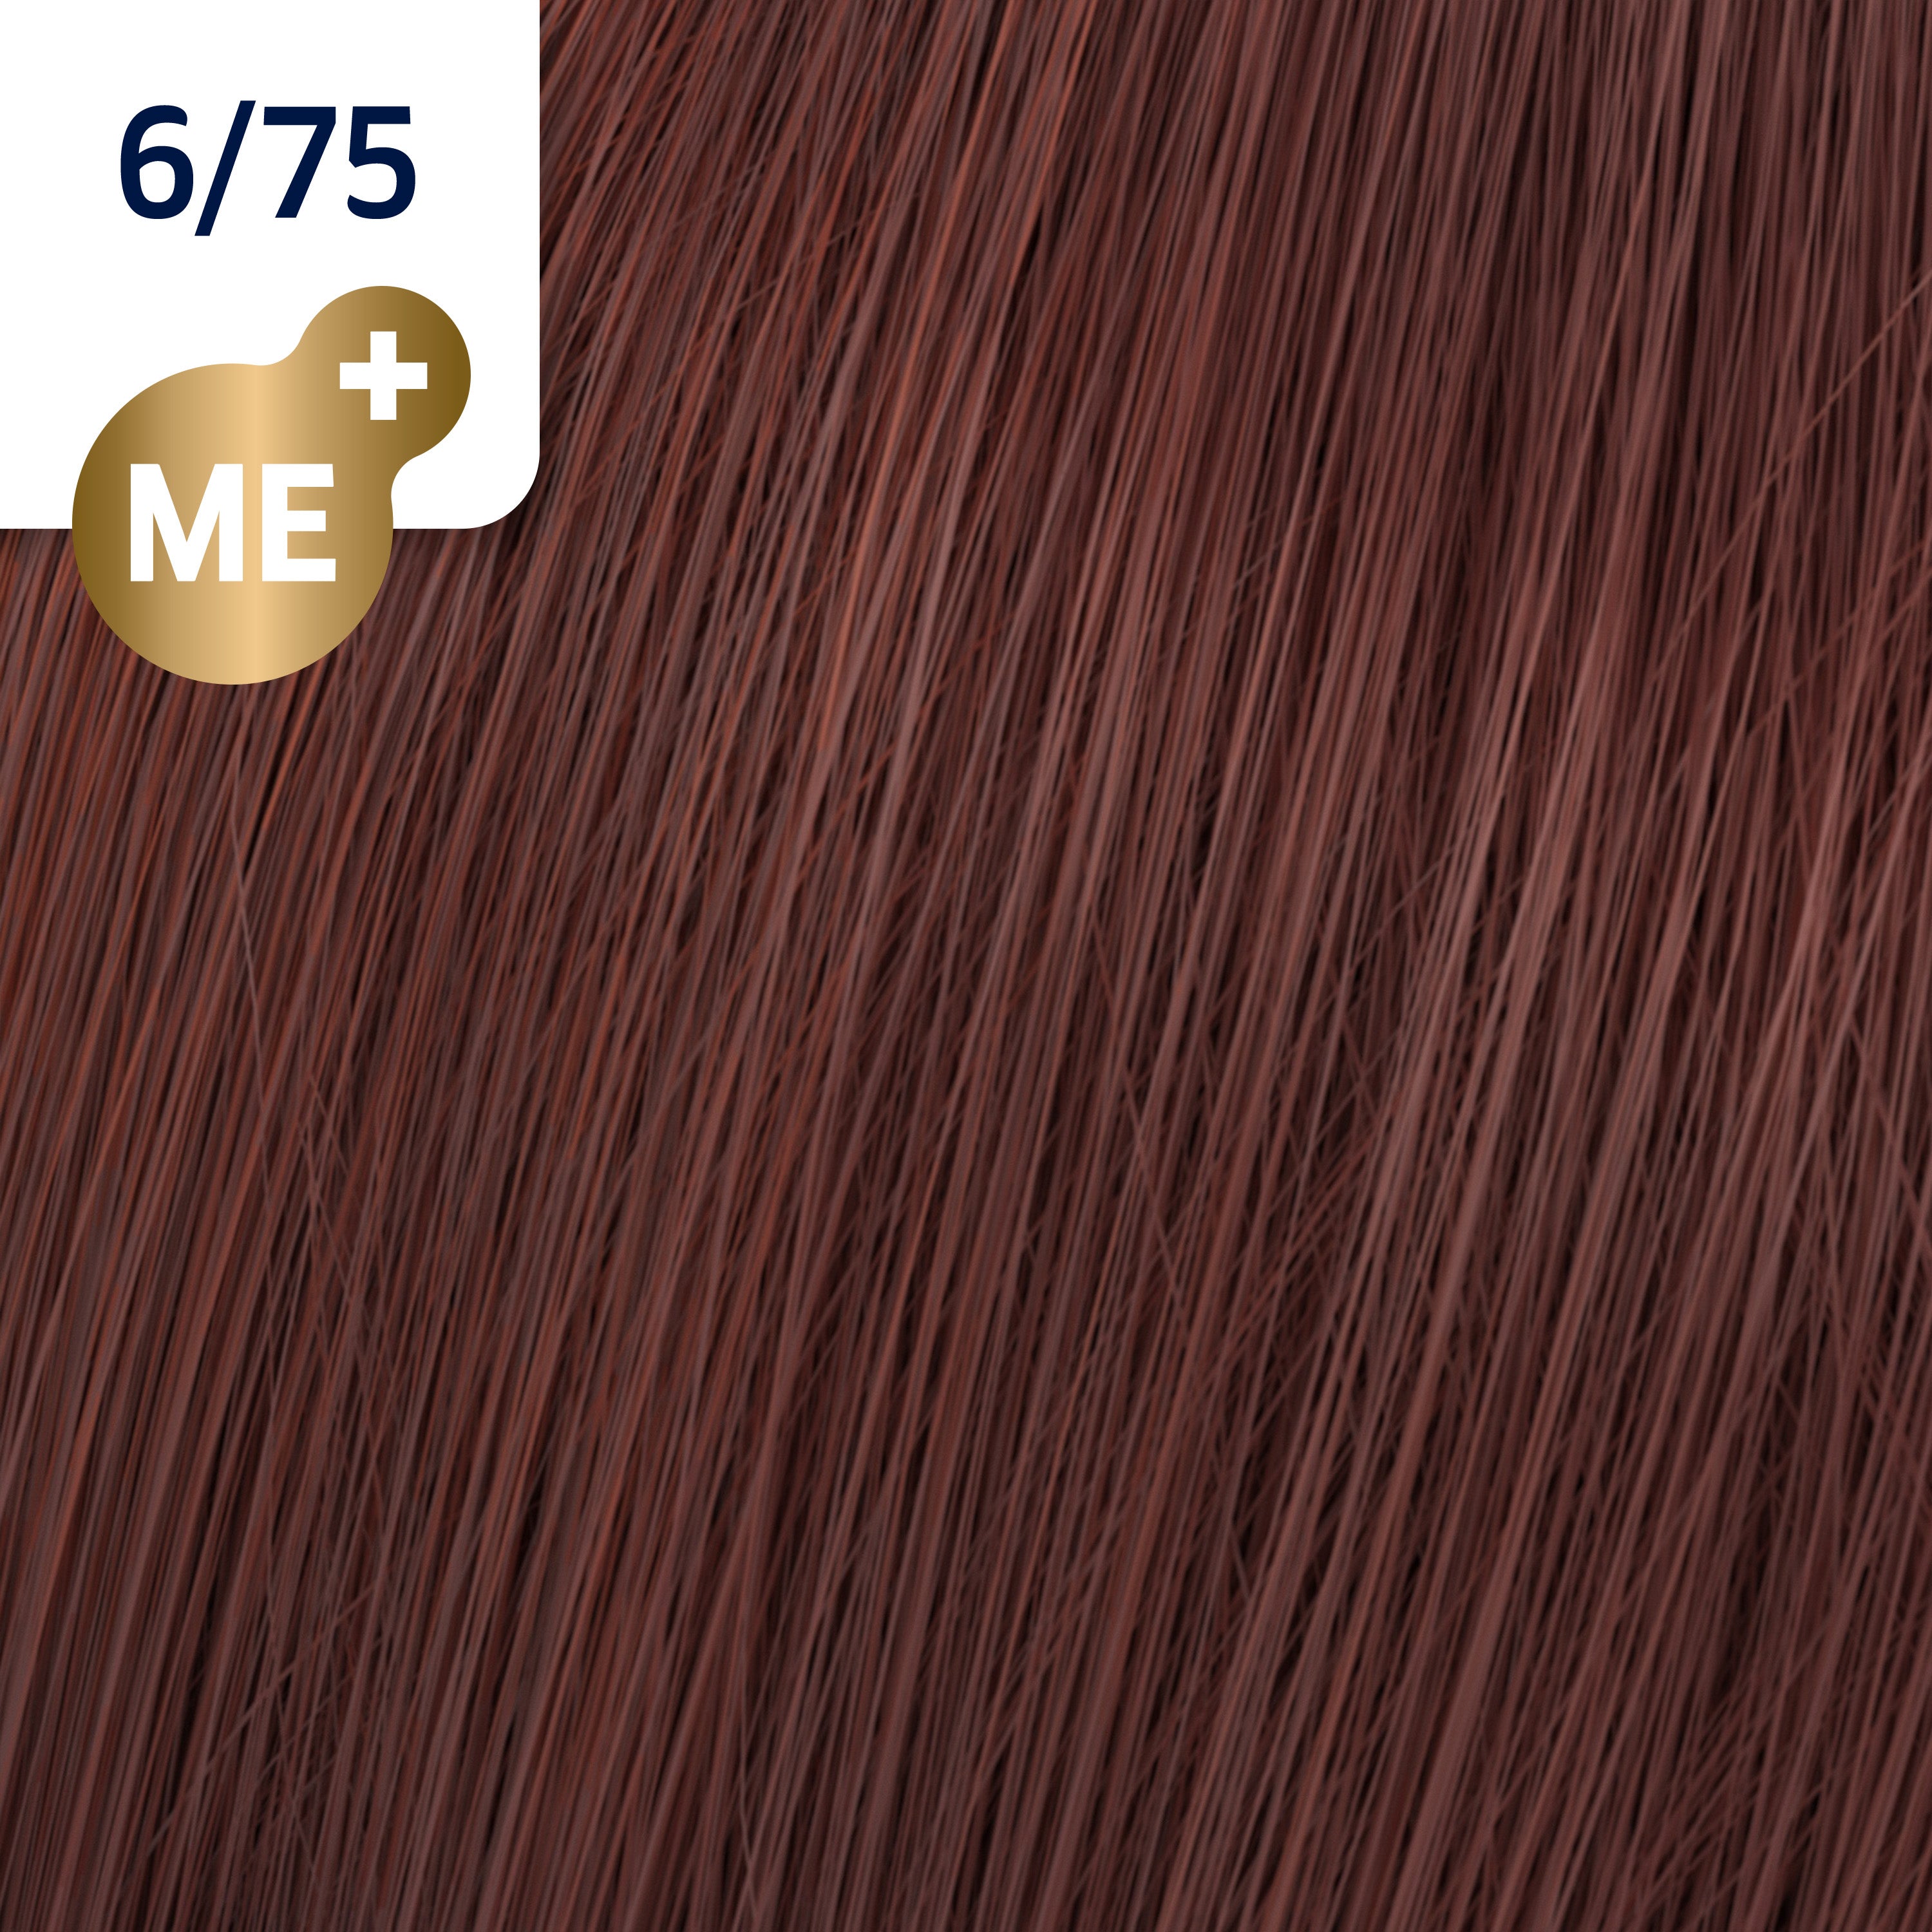 Wella Koleston Perfect Me+ Deep Browns 6/75 Mörkbrun - Mahogny Blond